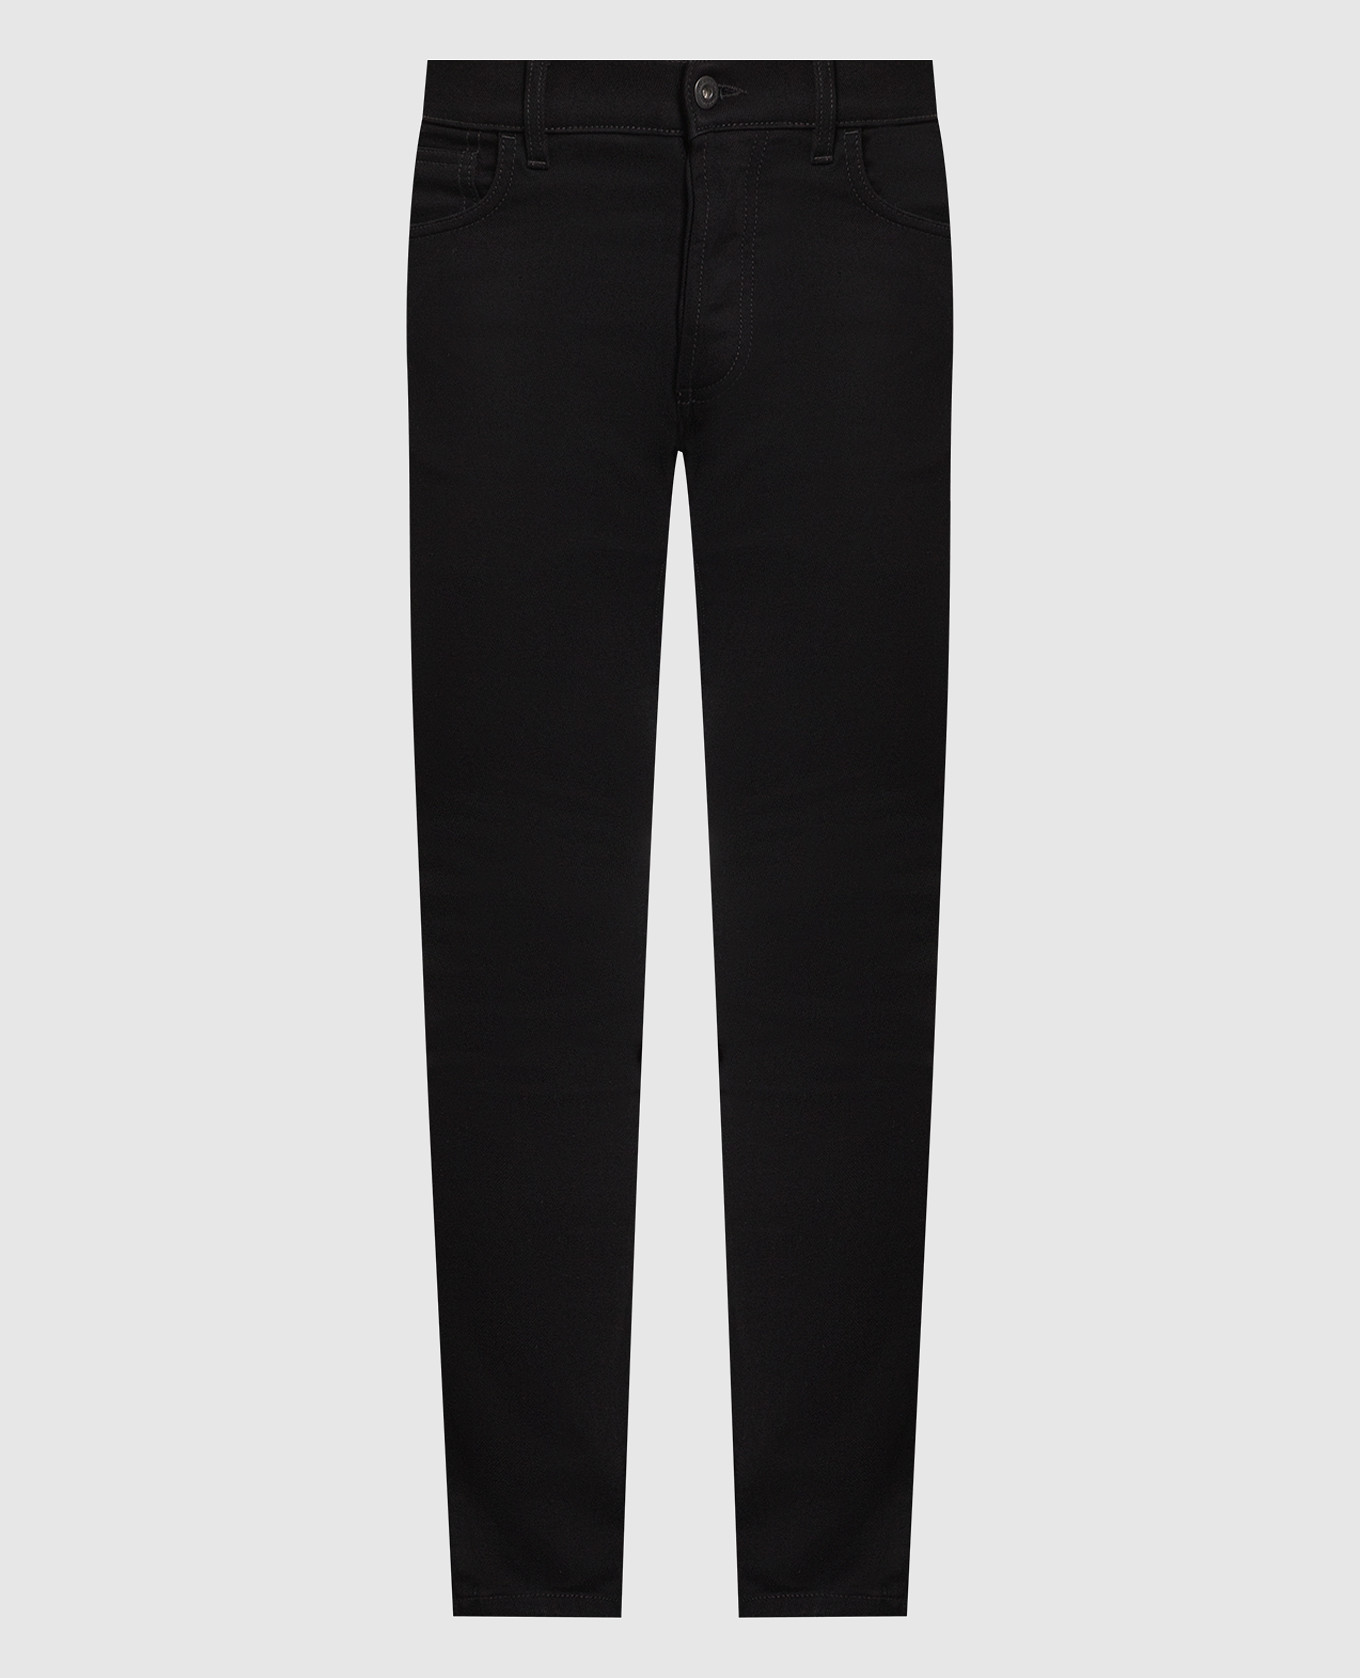 Black TEMPERA CROSS STONE slim jeans with logo